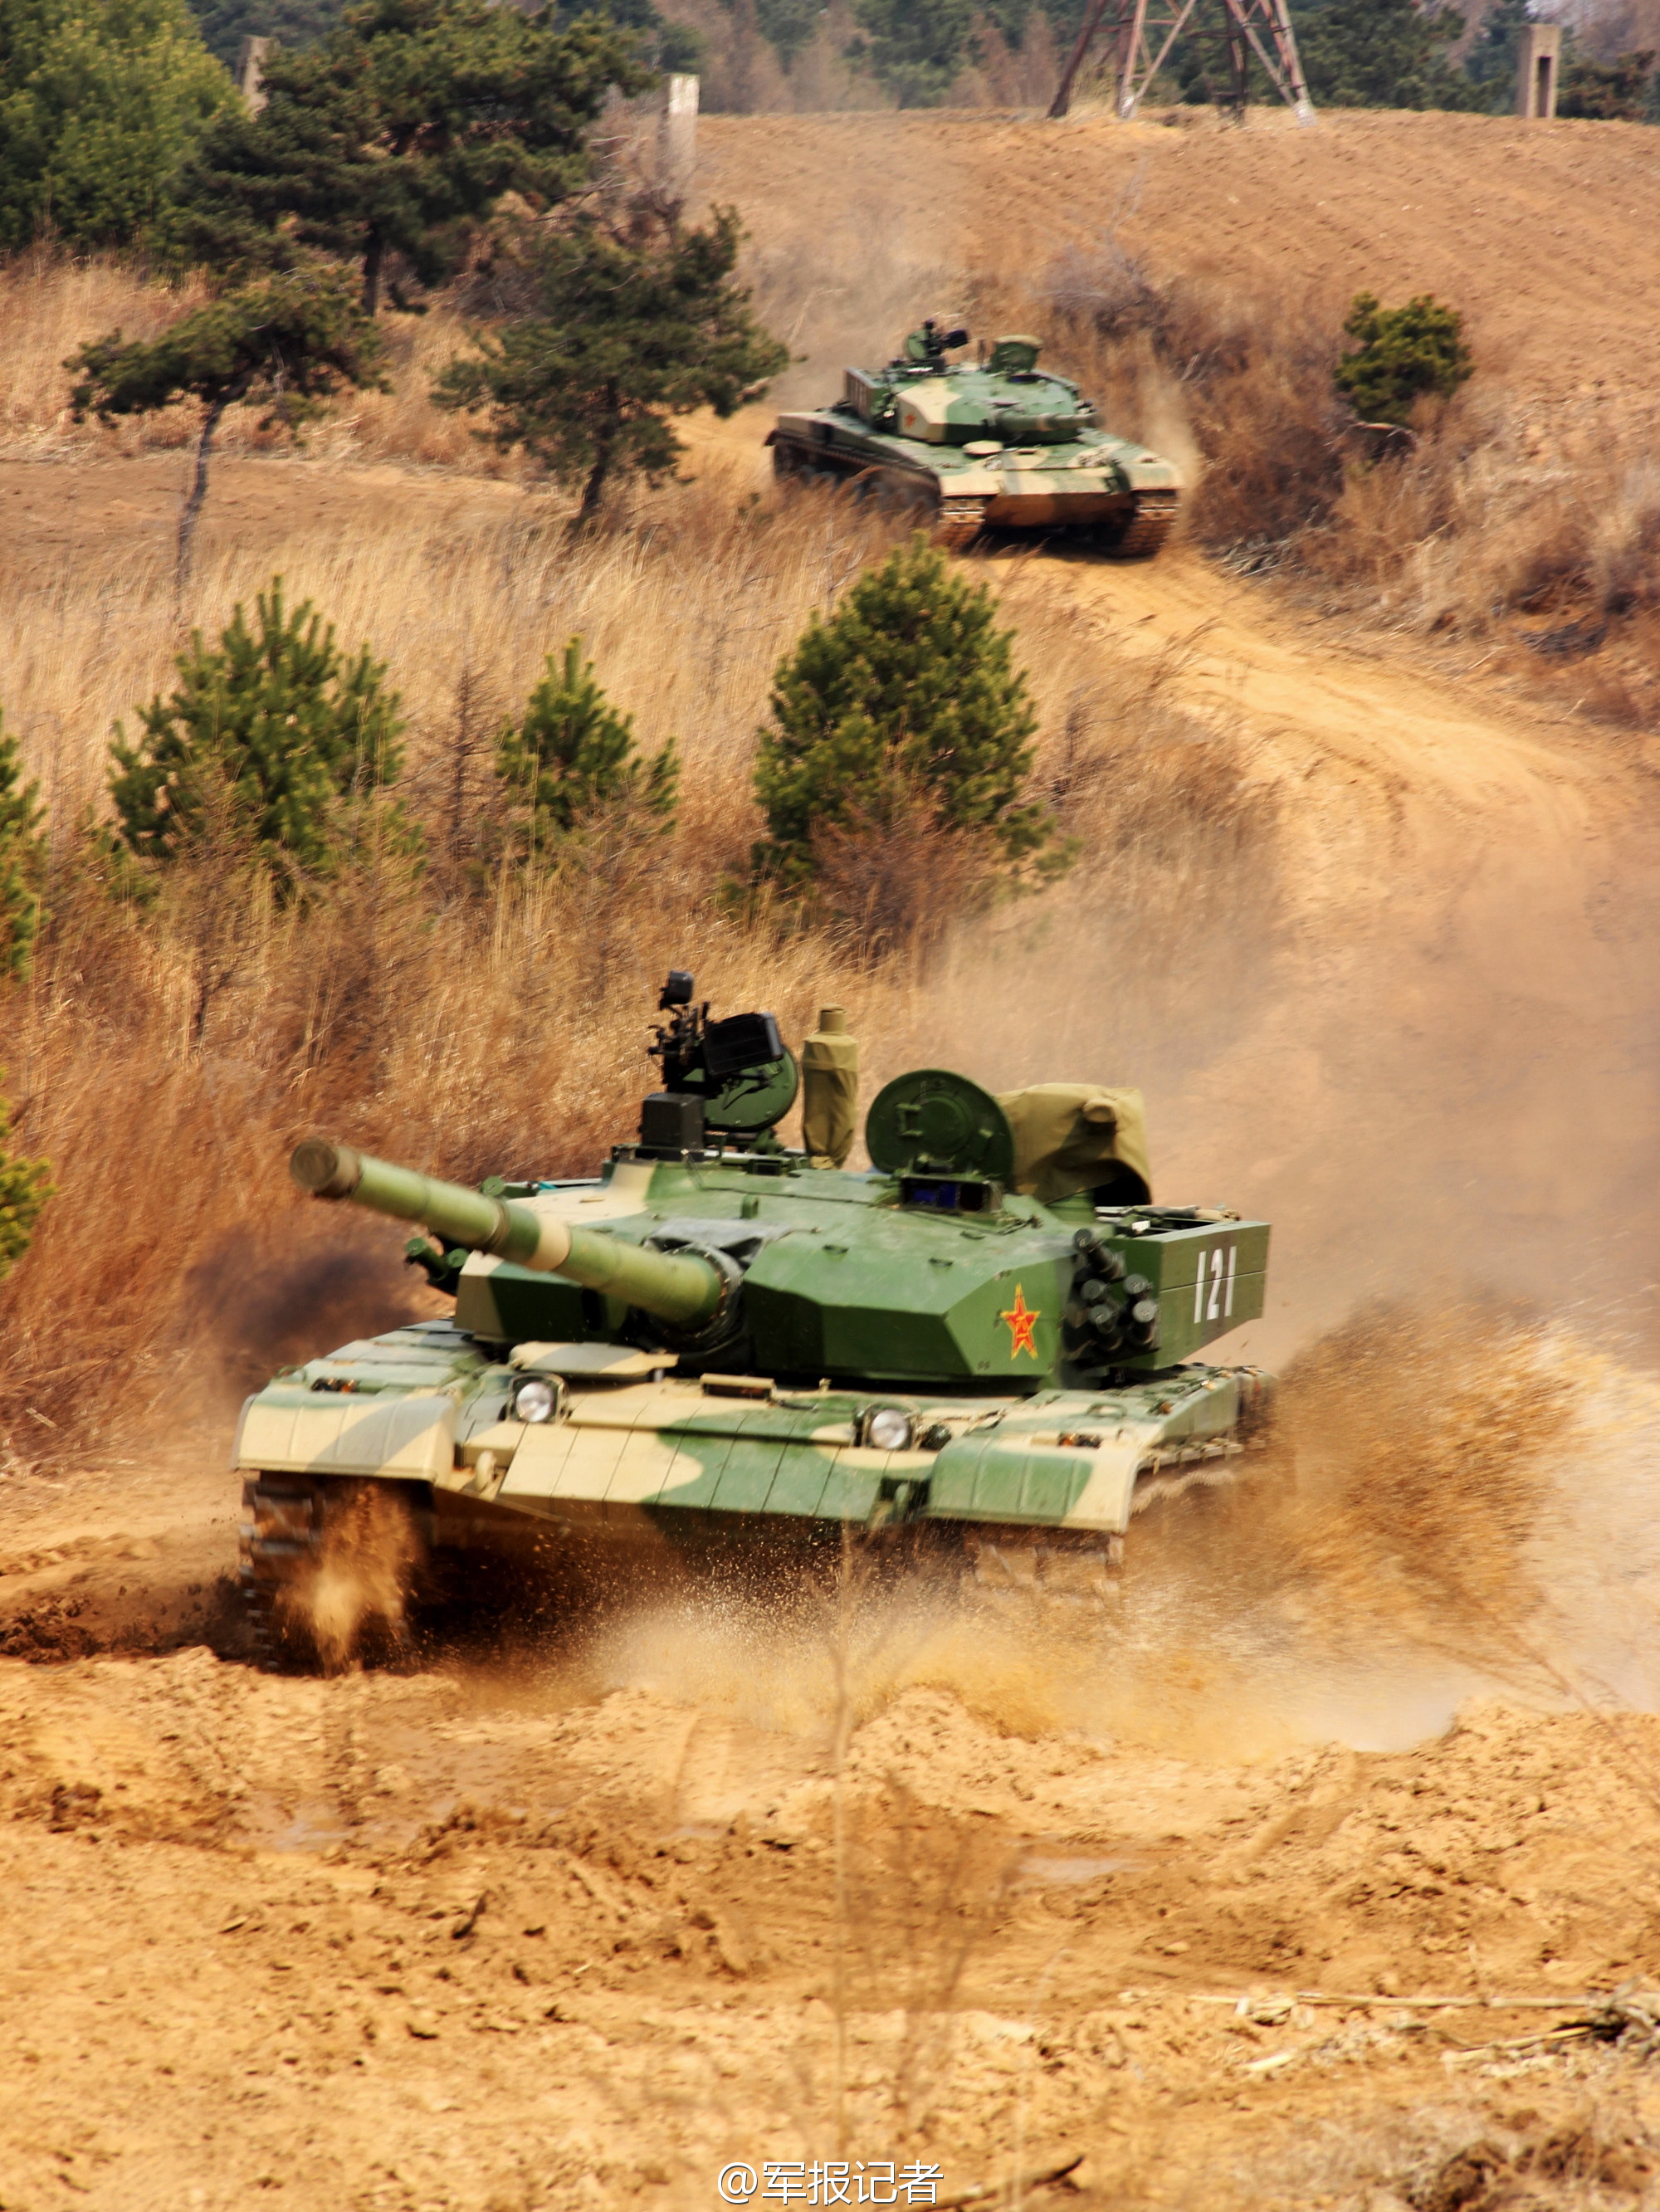 PHOTO: Chinese Tank Manoeuvre Exercise – Defence Blog2000 x 2665